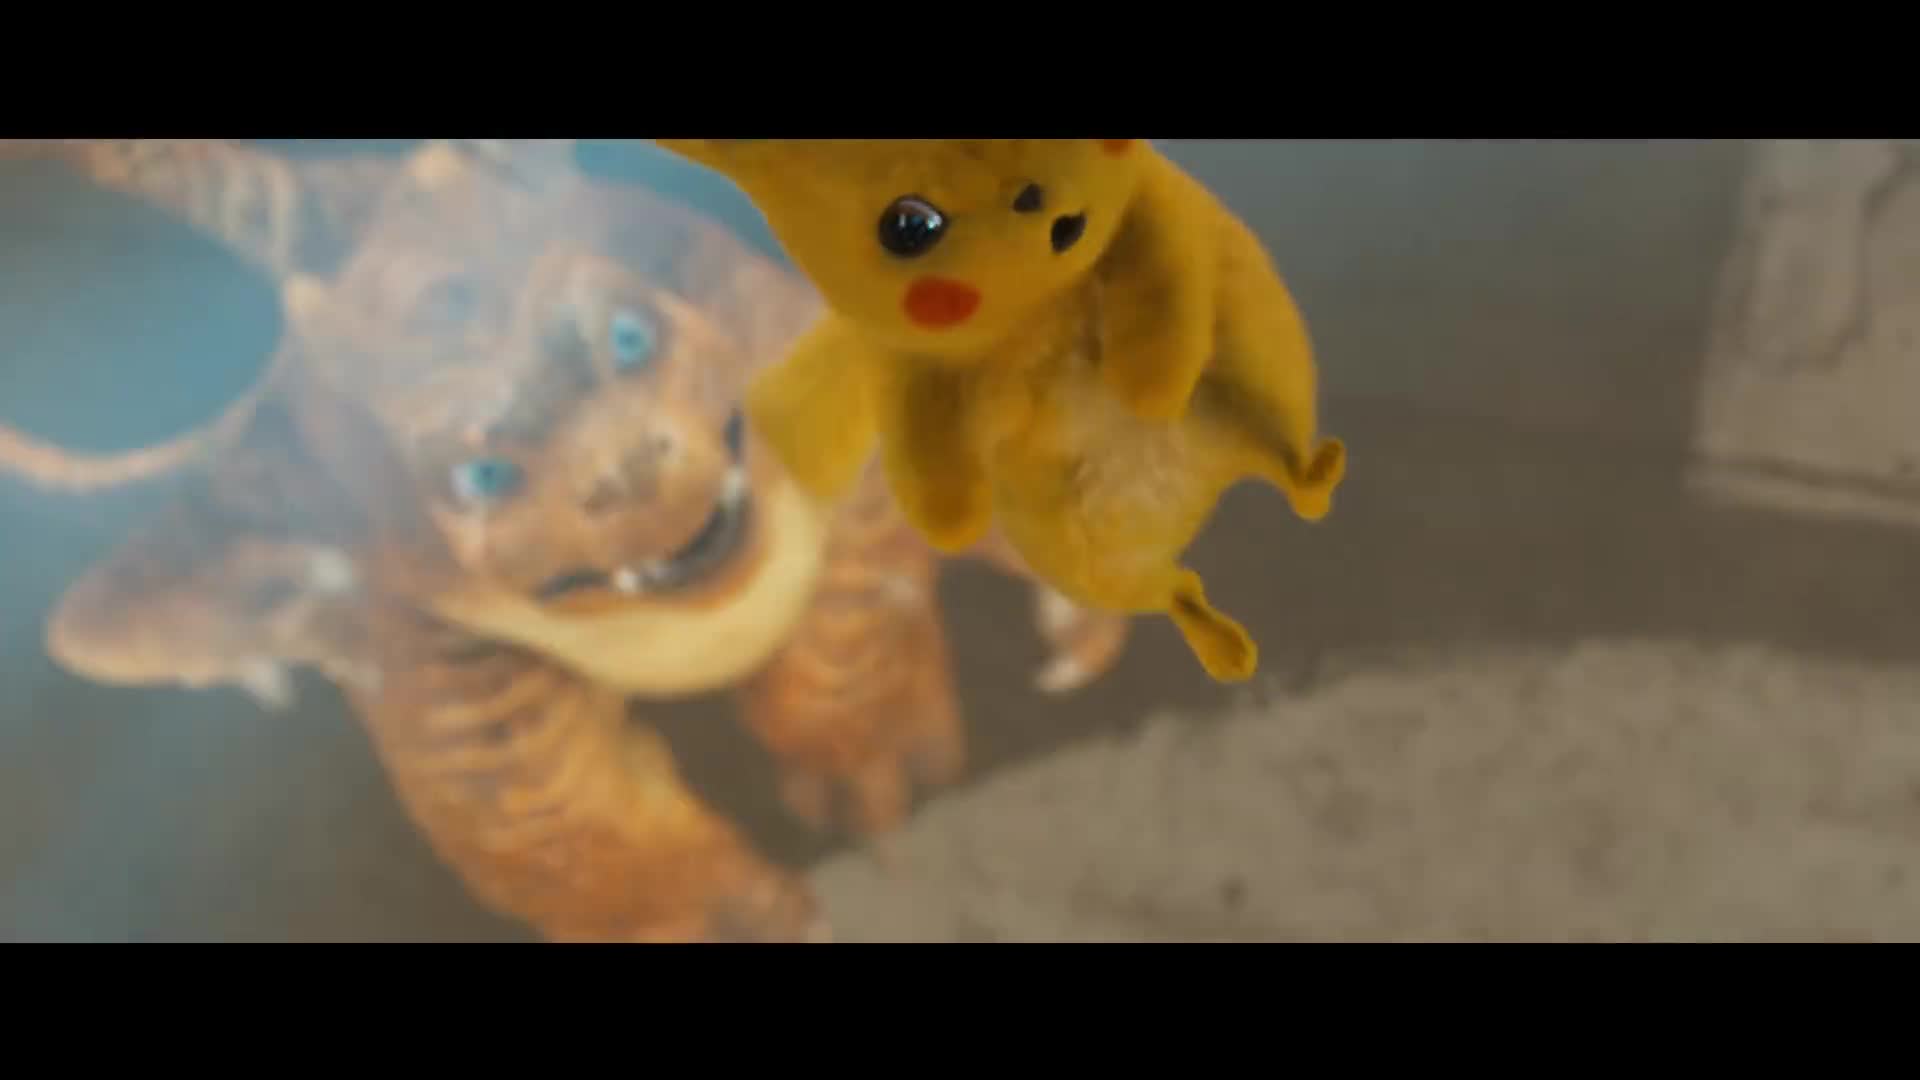 POKÉMON Detective Pikachu GIF. Find, Make